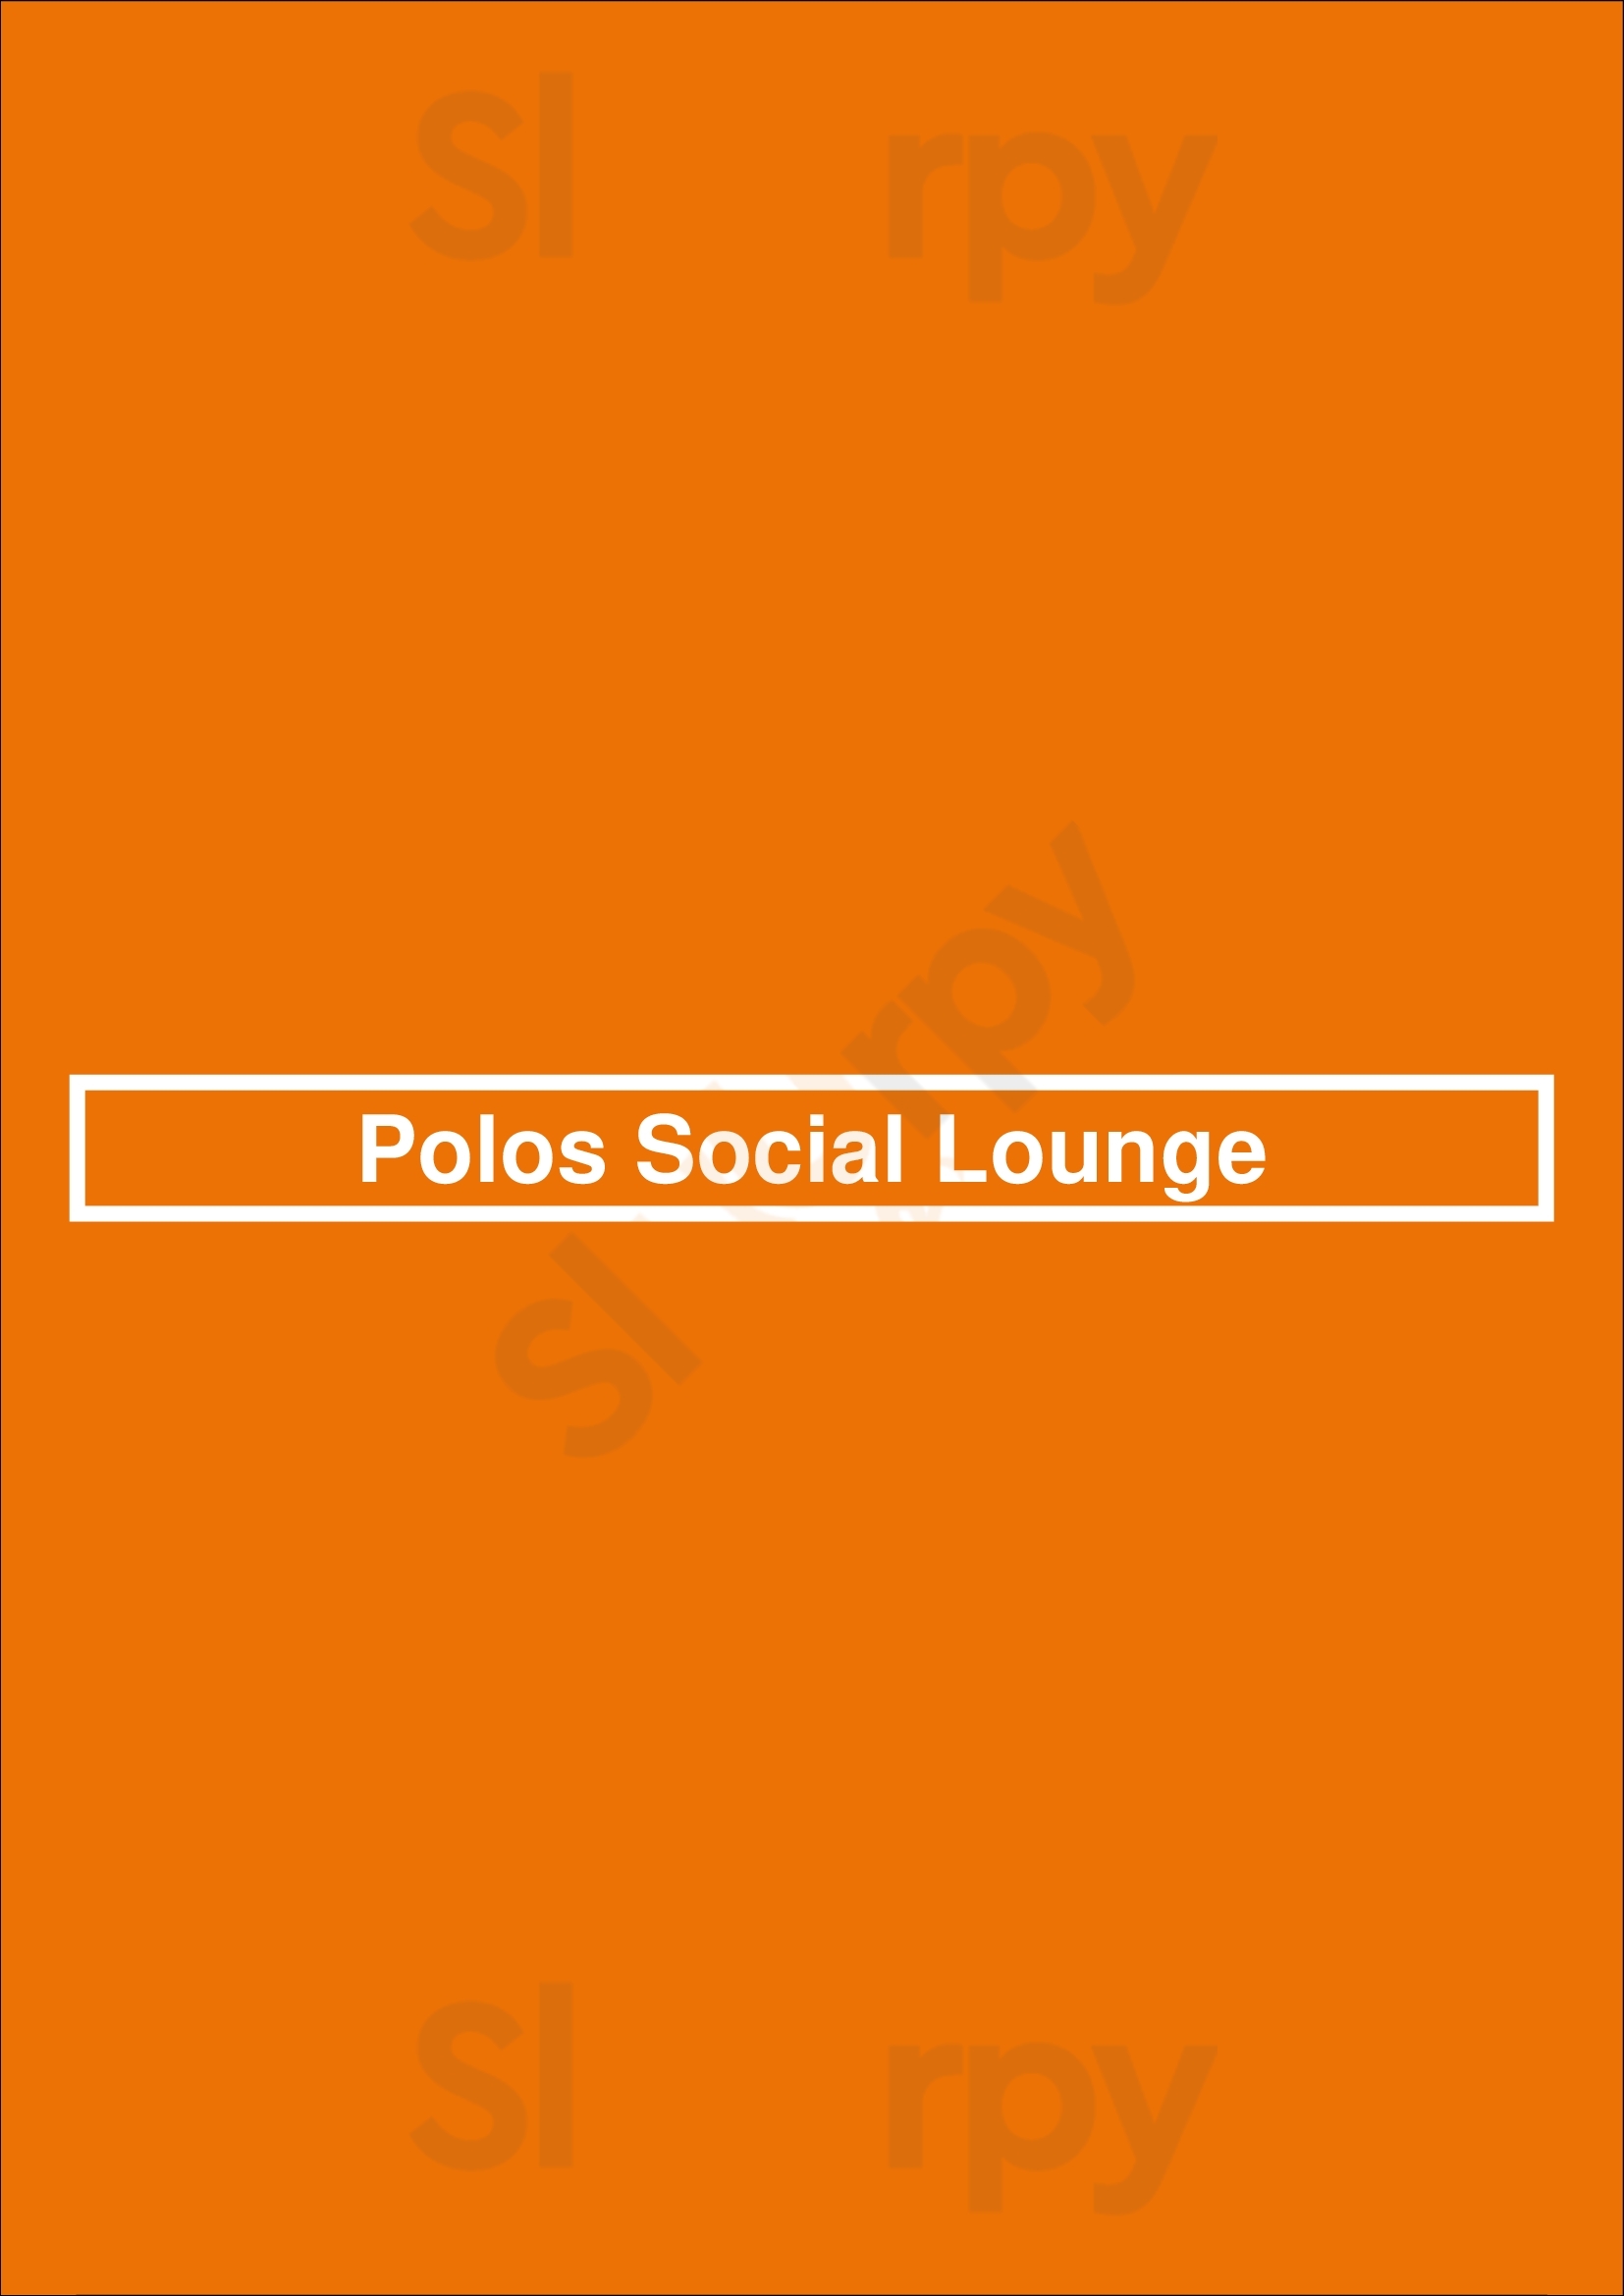 Polos Social Lounge Sherwood Park Menu - 1